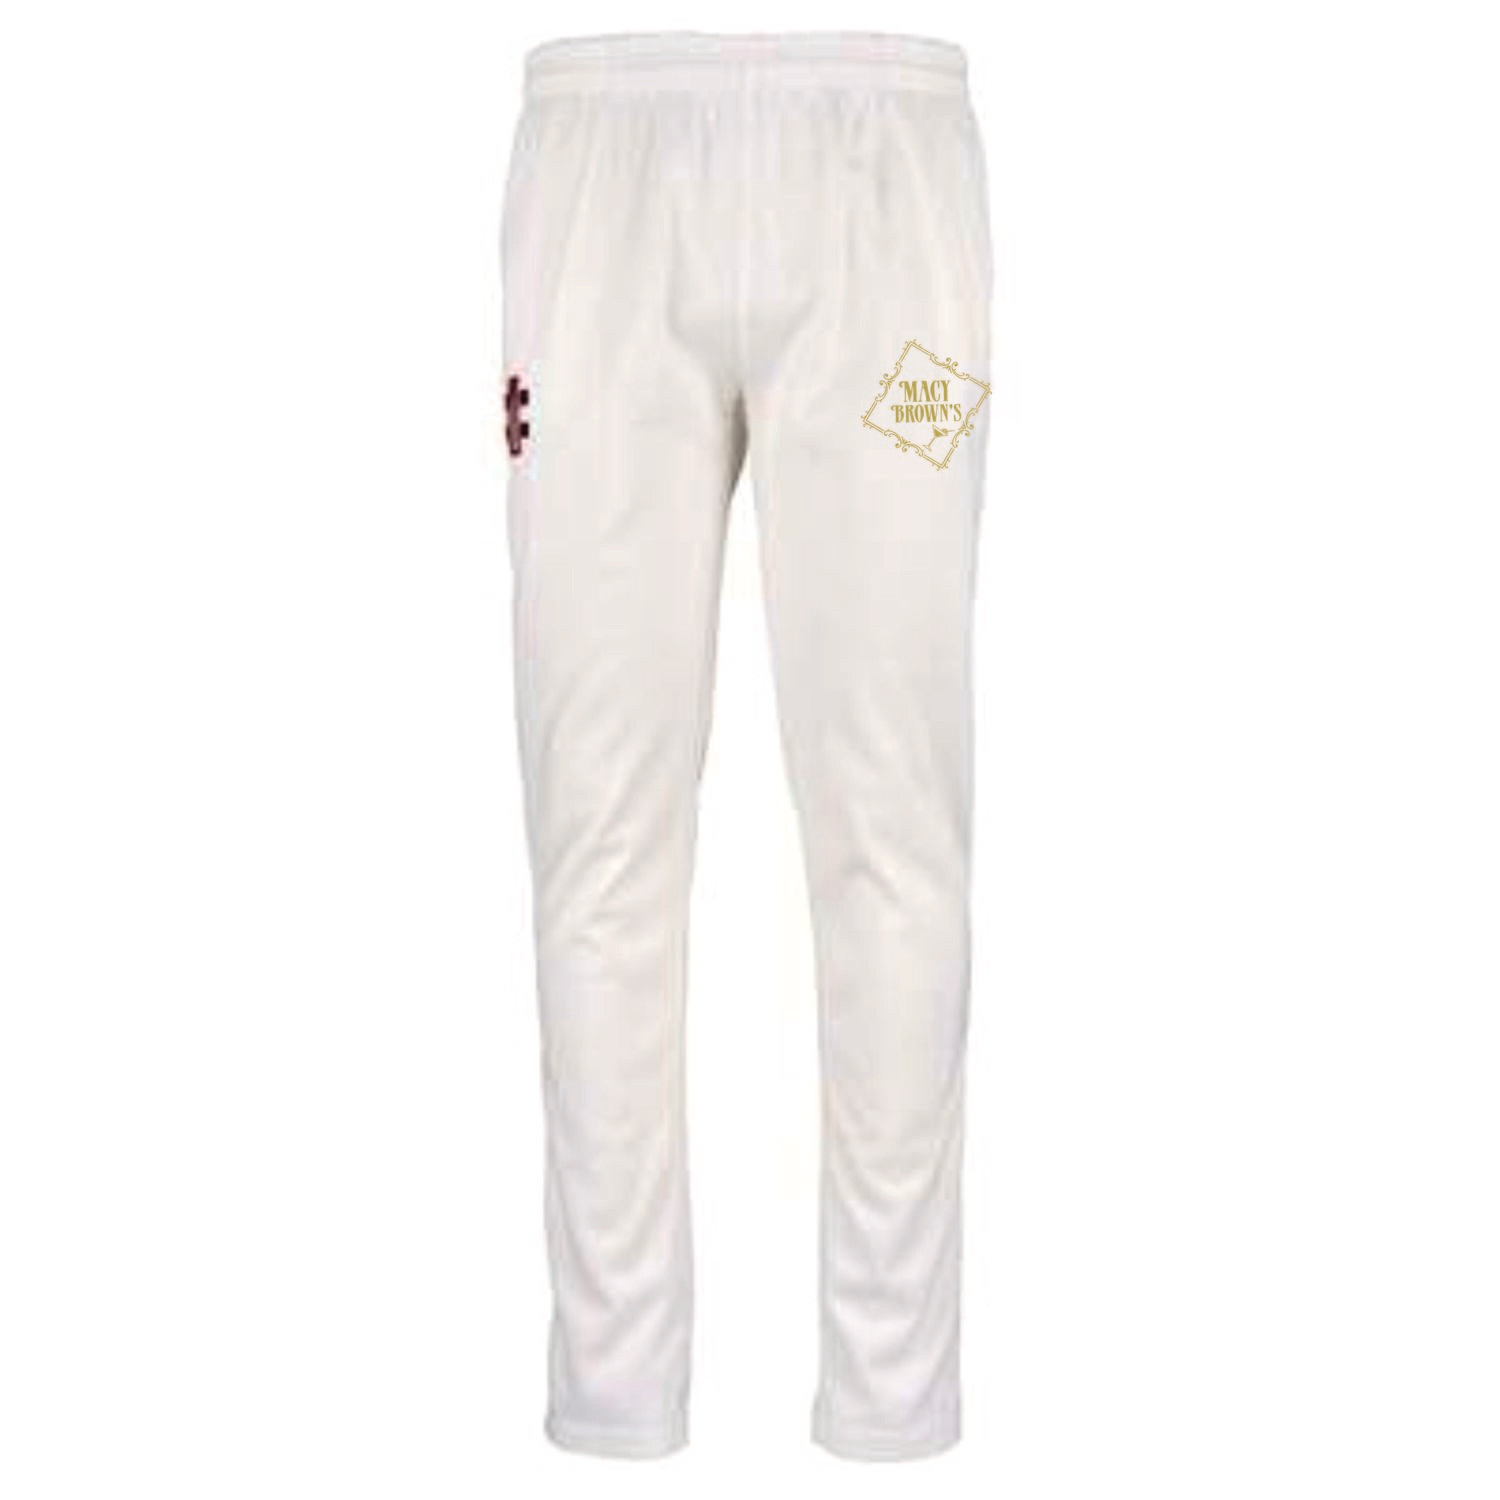 Nunthorpe (Macy Brown's) Matrix V2 SLIM FIT Cricket Trousers